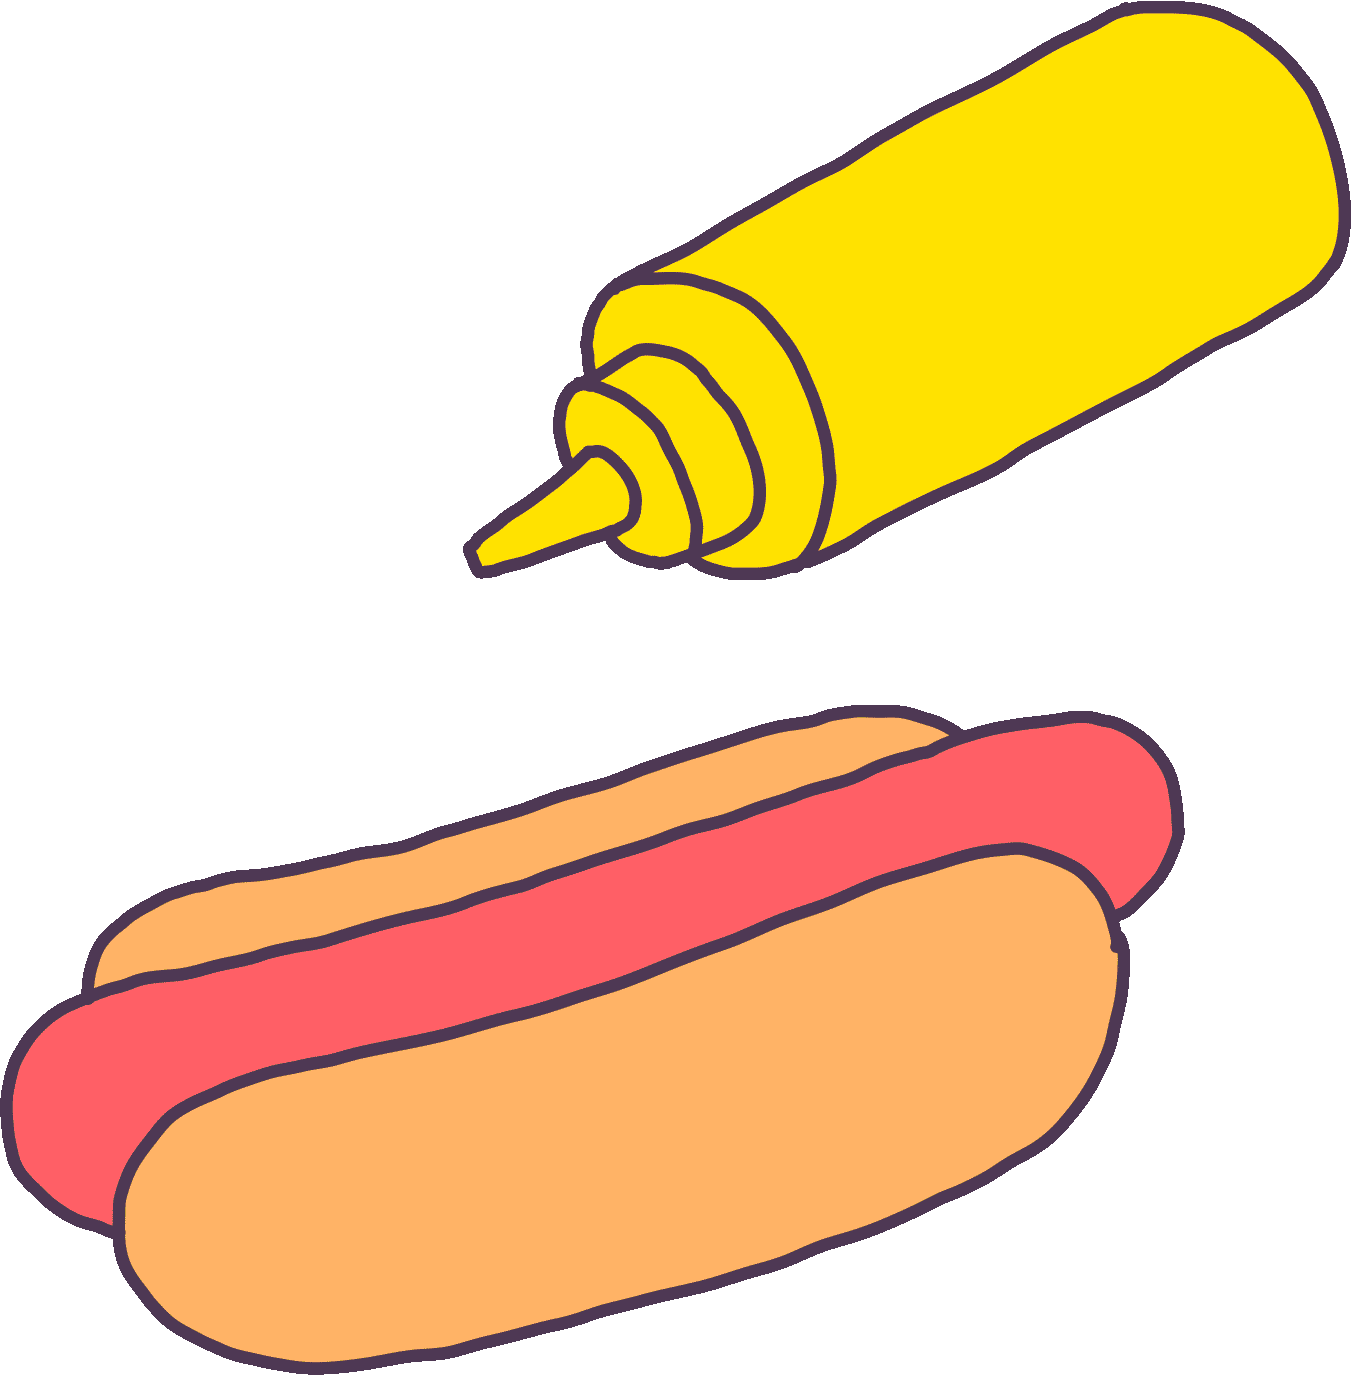 Hot Dog Sticker by Tim Lahan